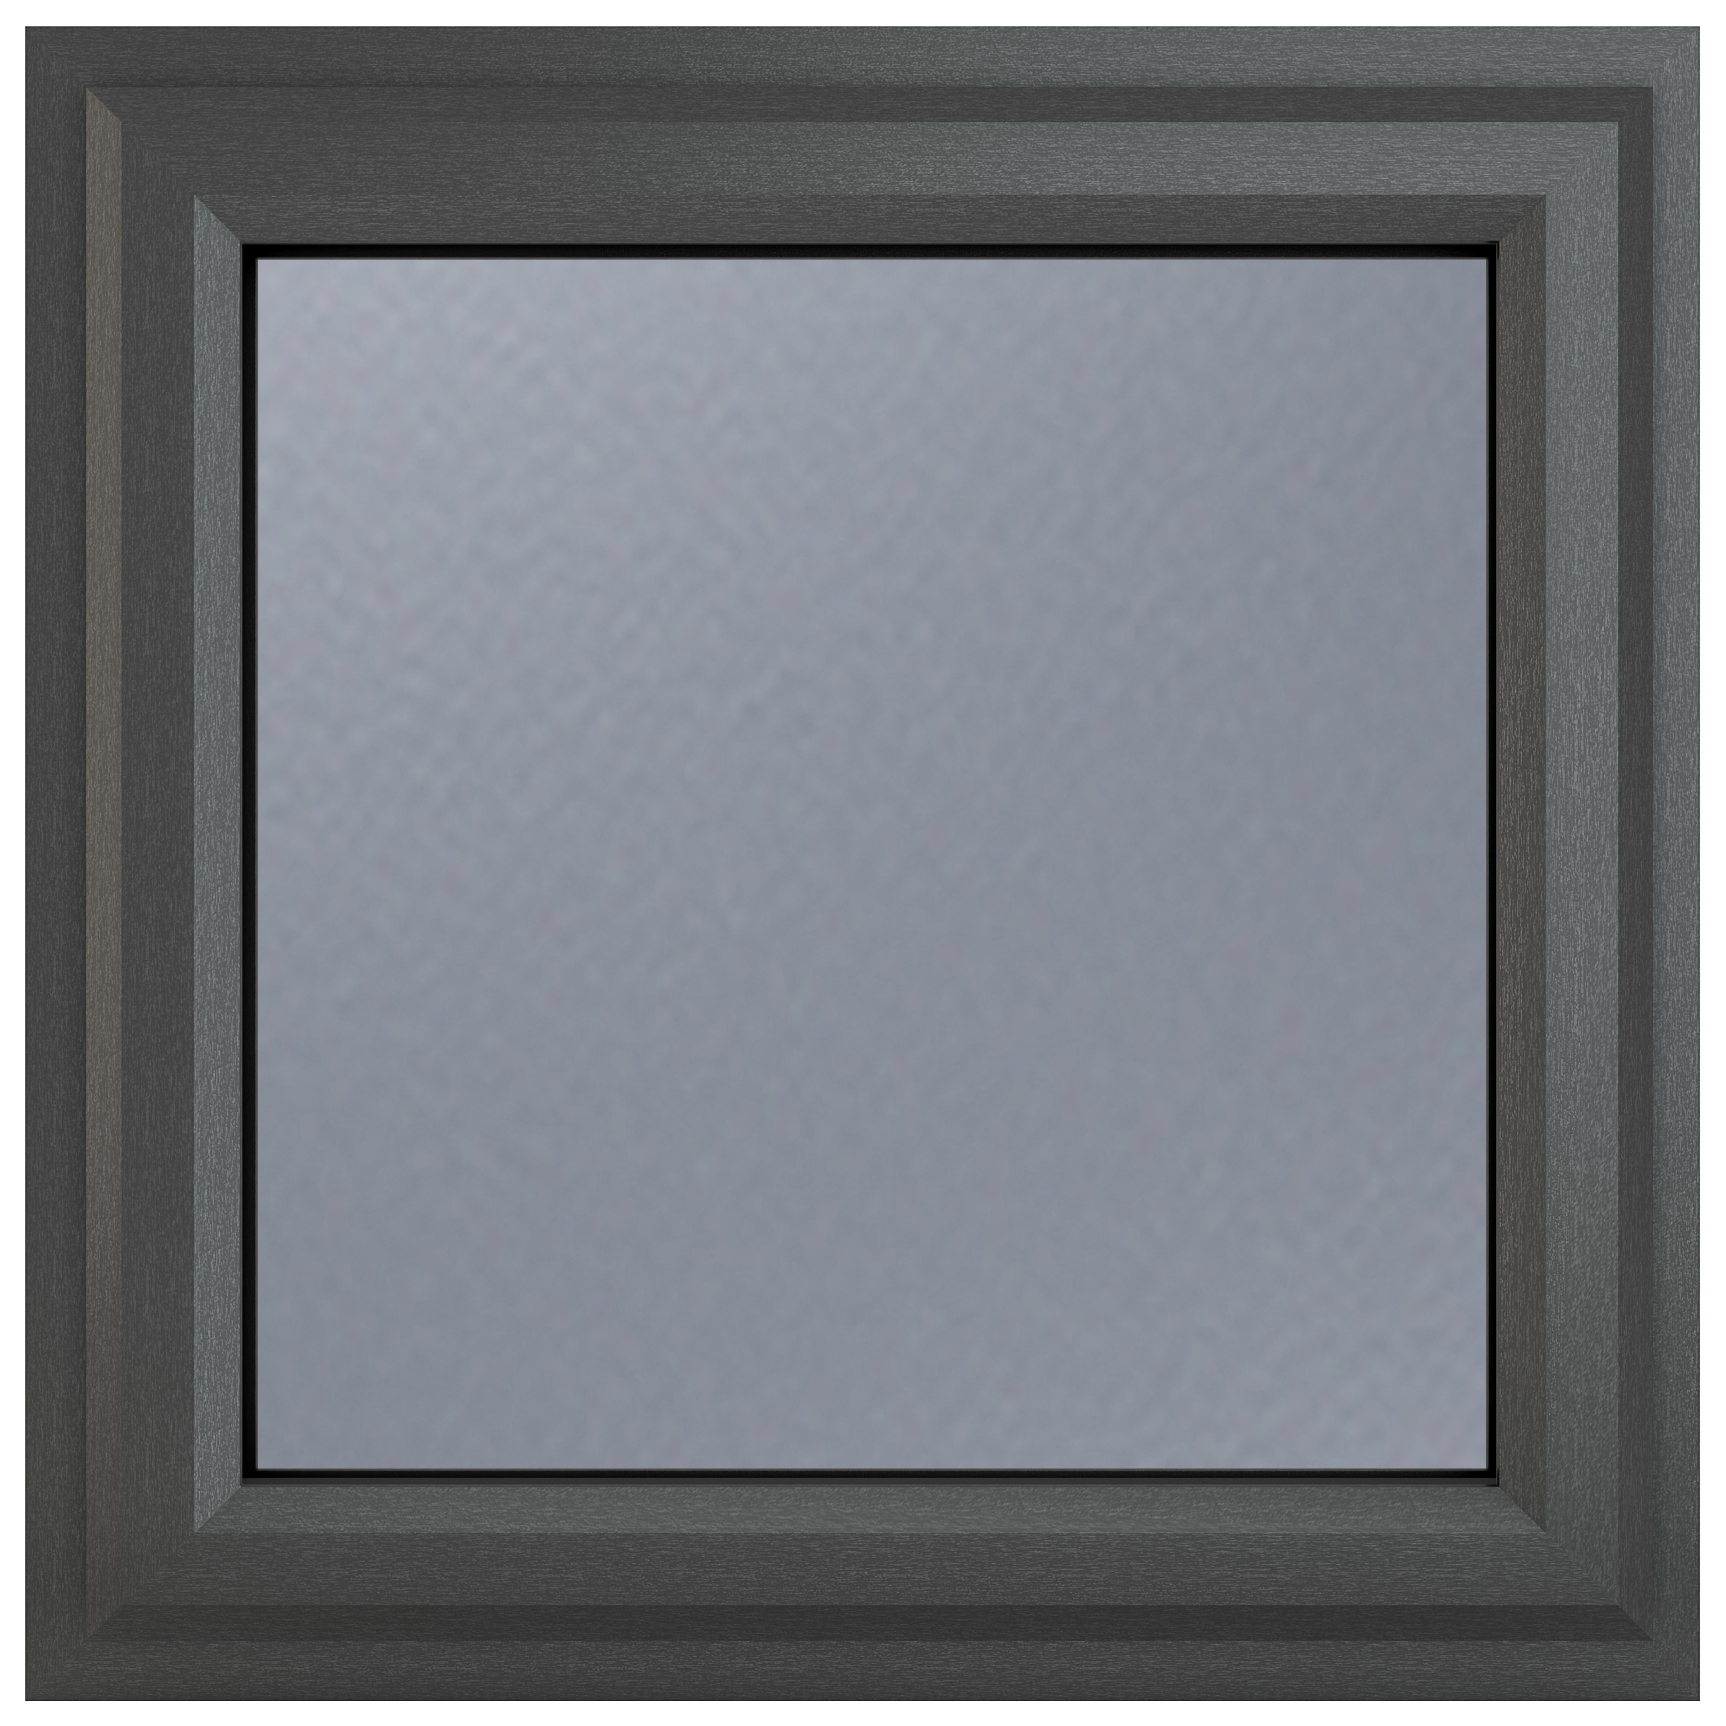 Crystal uPVC Grey / White Top Hung Obscure Triple Glazed Window - 610 x 610mm